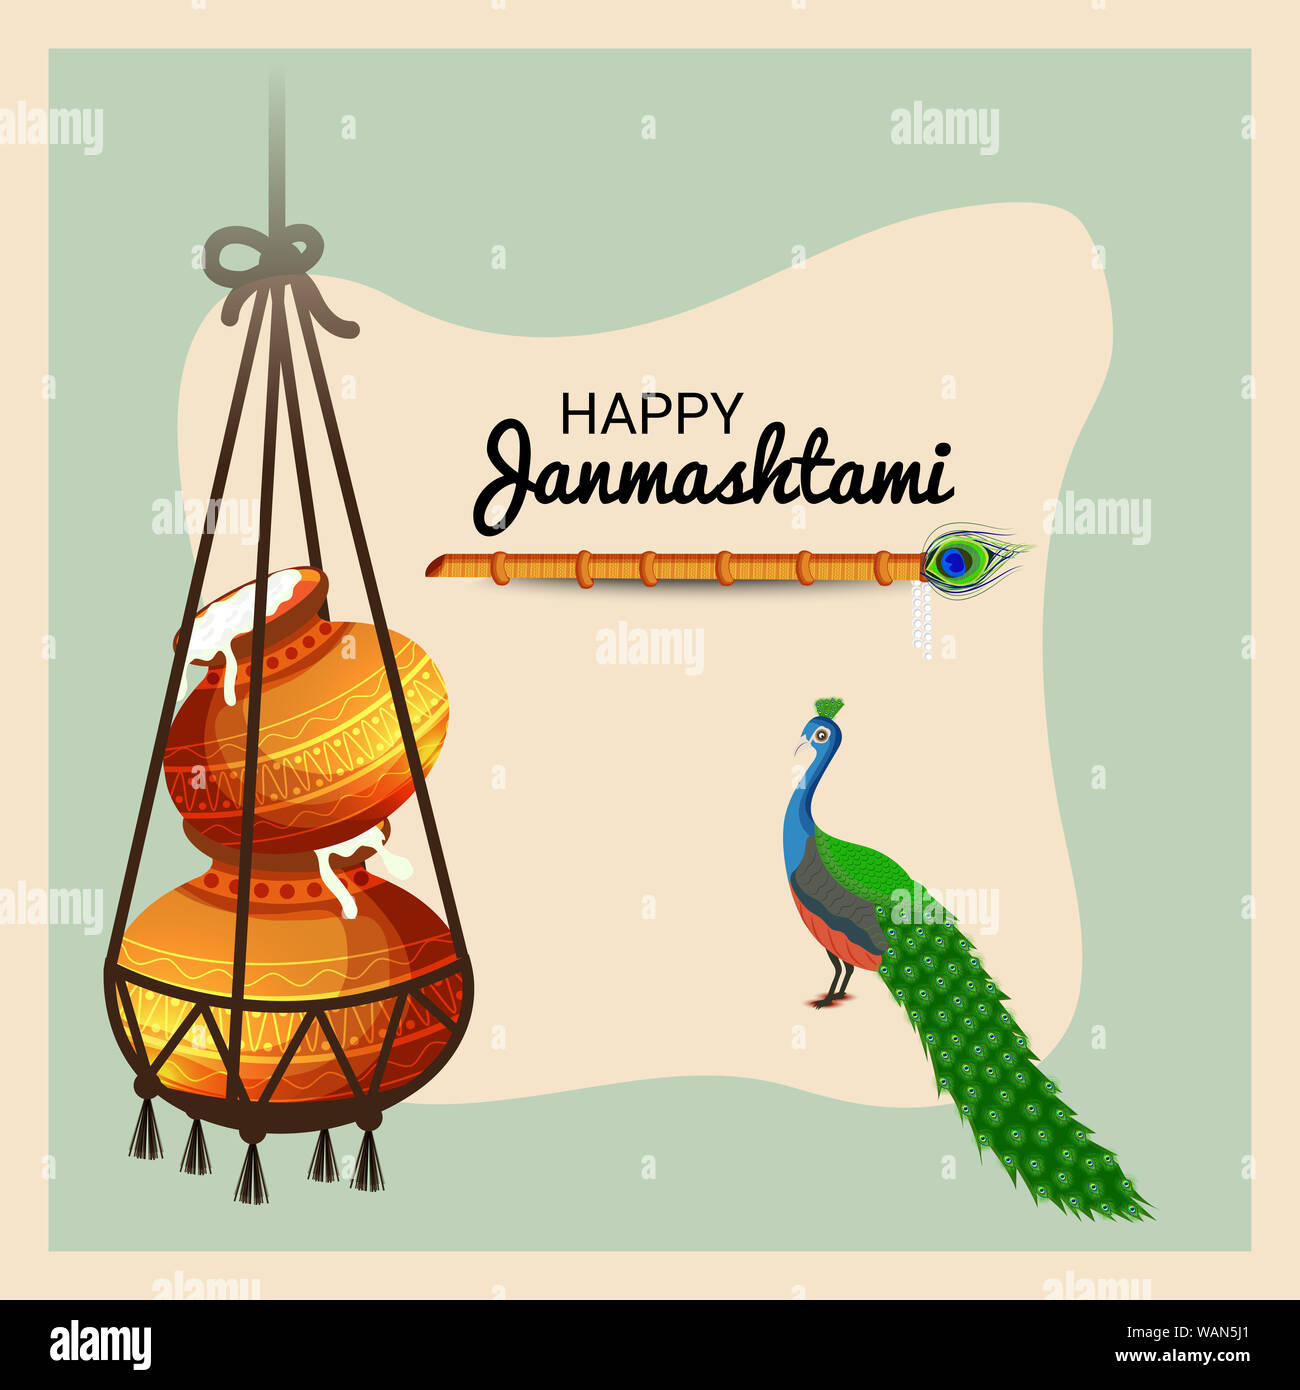 Vector illustration of a Background or Brochure for indian festival of  Happy Janmashtami Celebration Stock Photo - Alamy